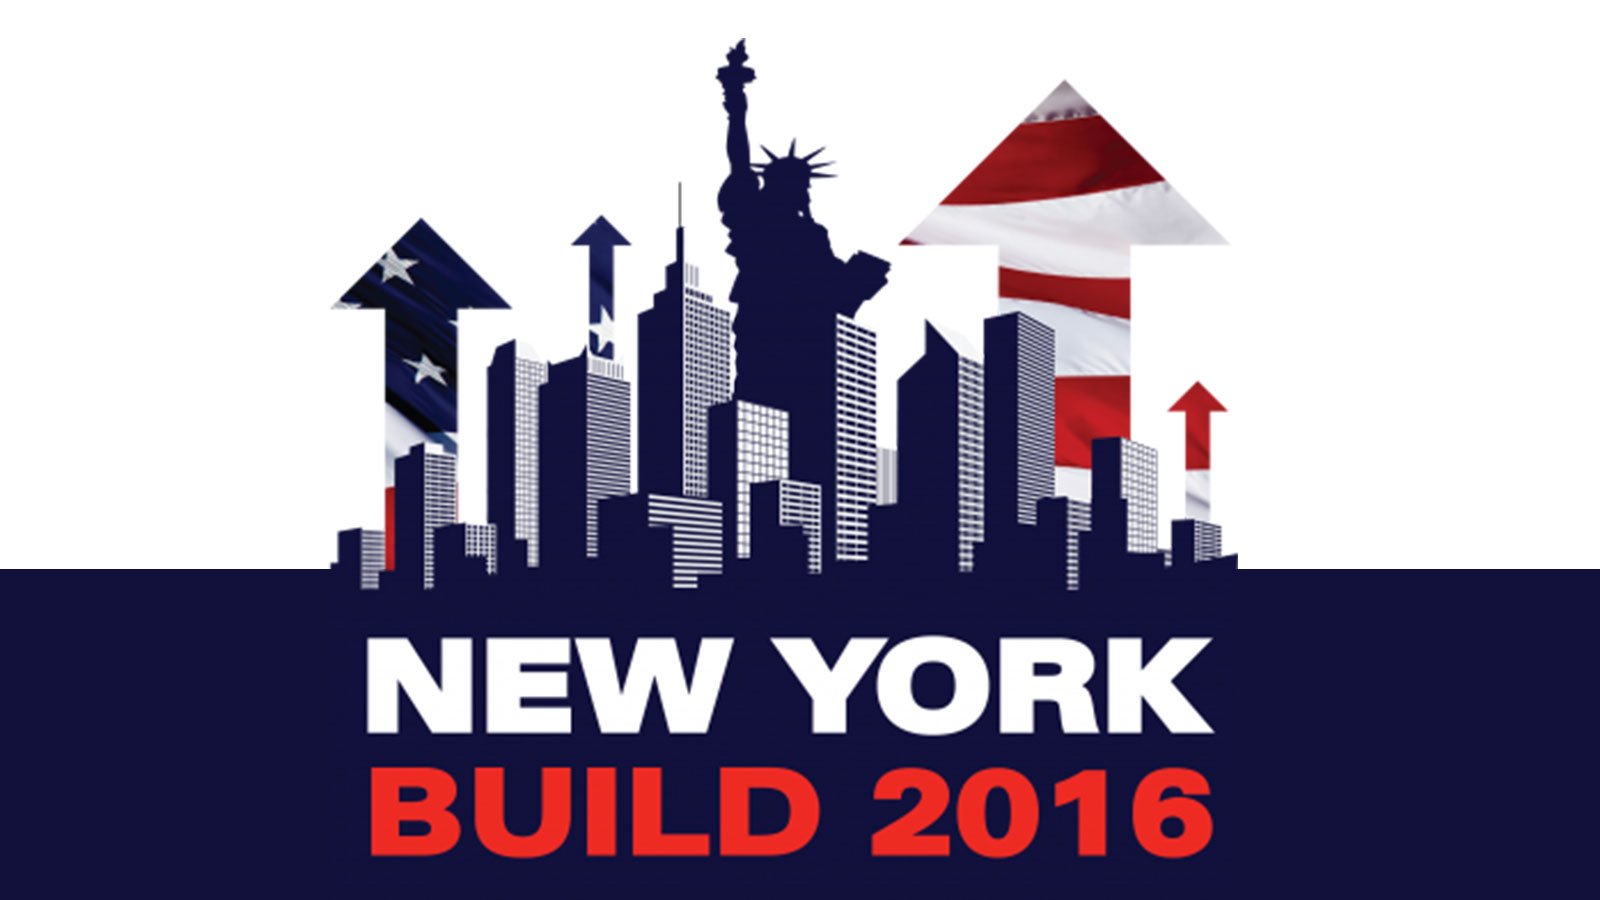 Asite to present & exhibit at New York Build